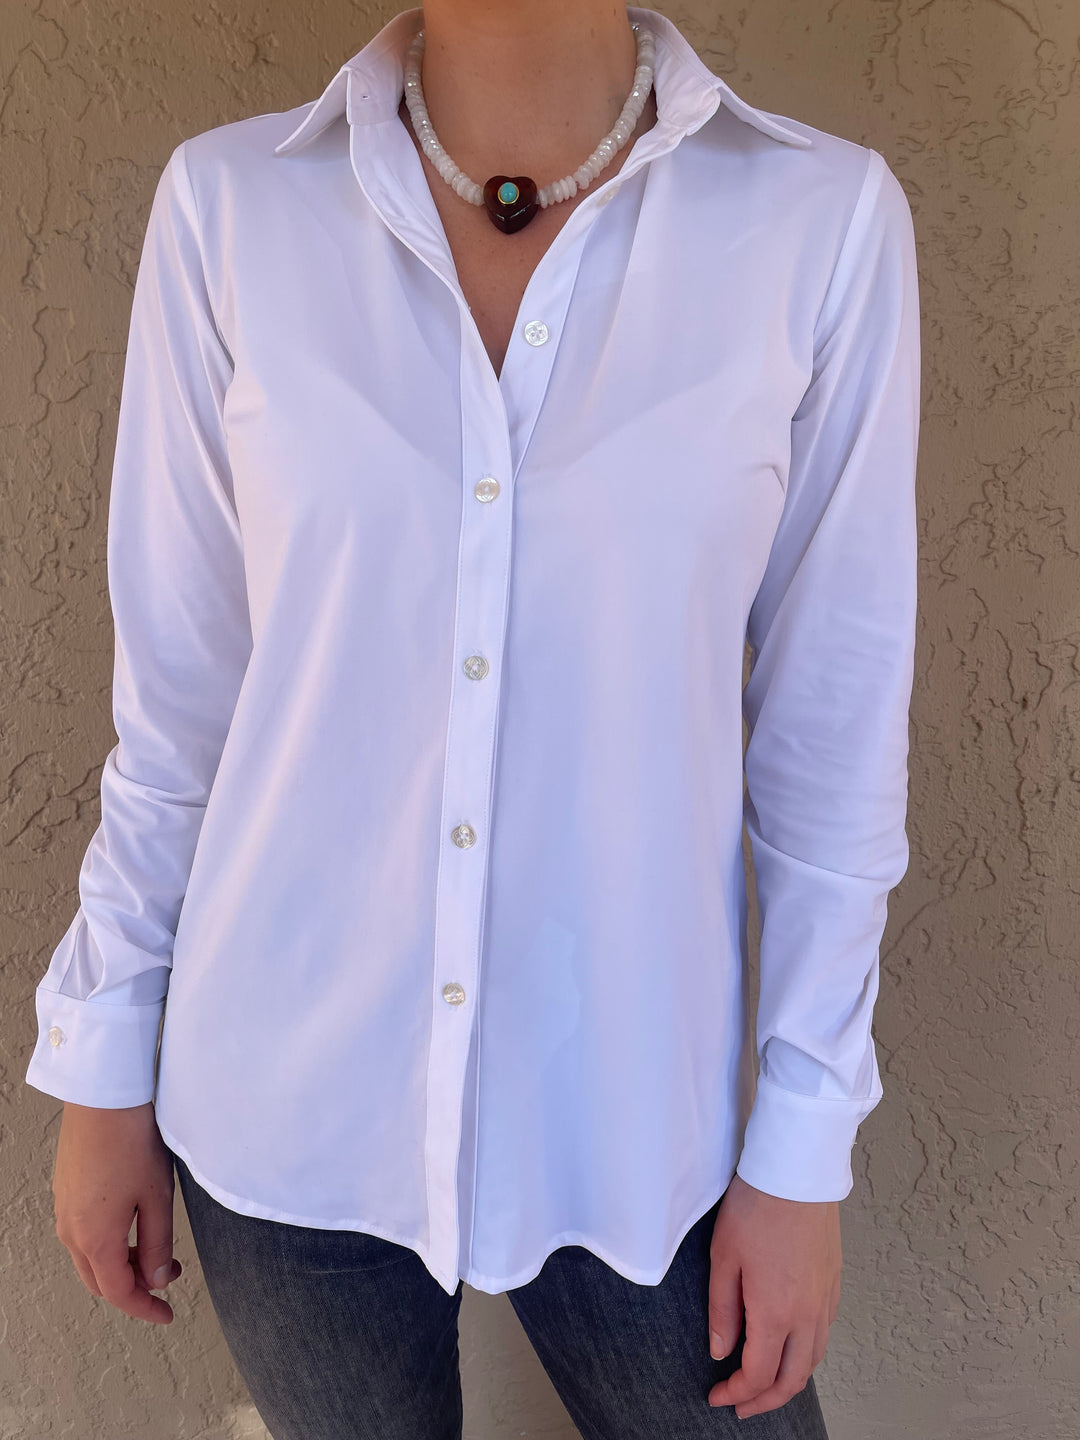 Button Down Collared Shirt - White